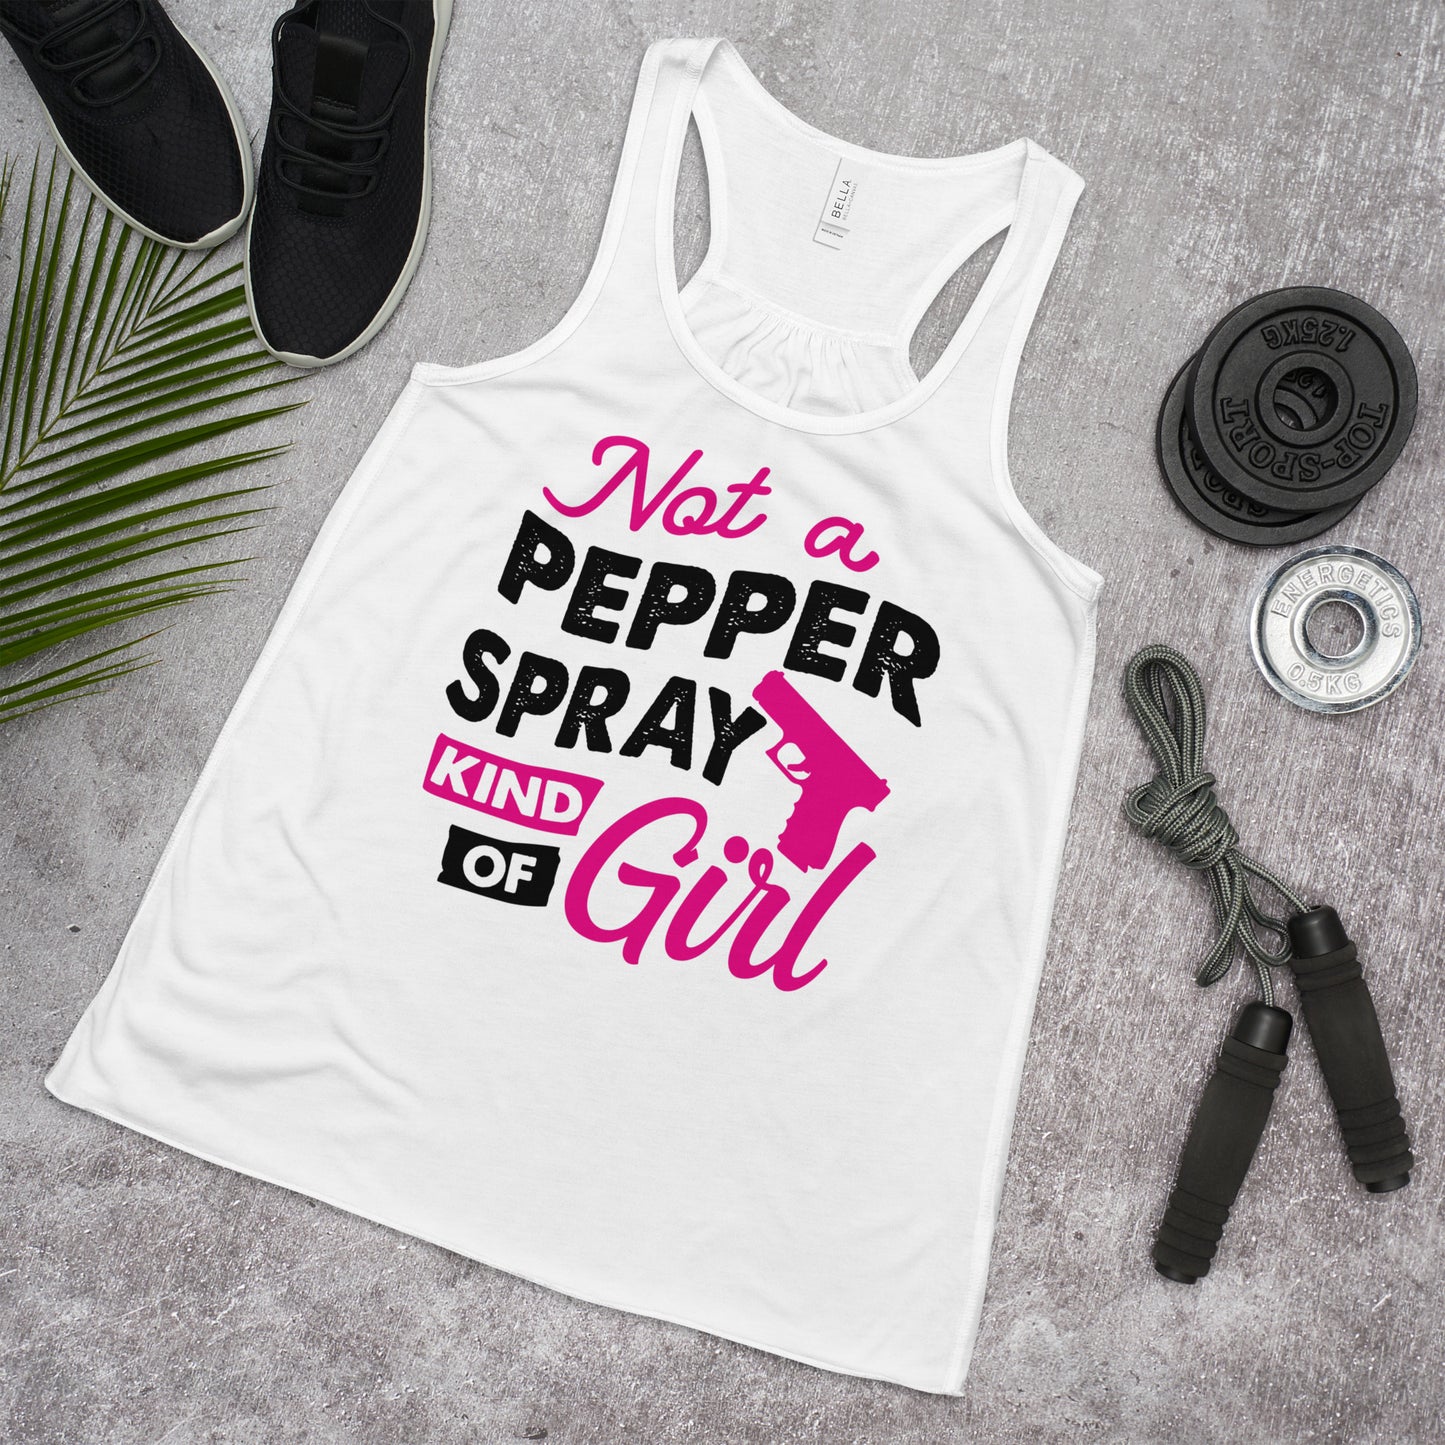 Not A Pepper Spray Kind of Girl Racerback Tank Top